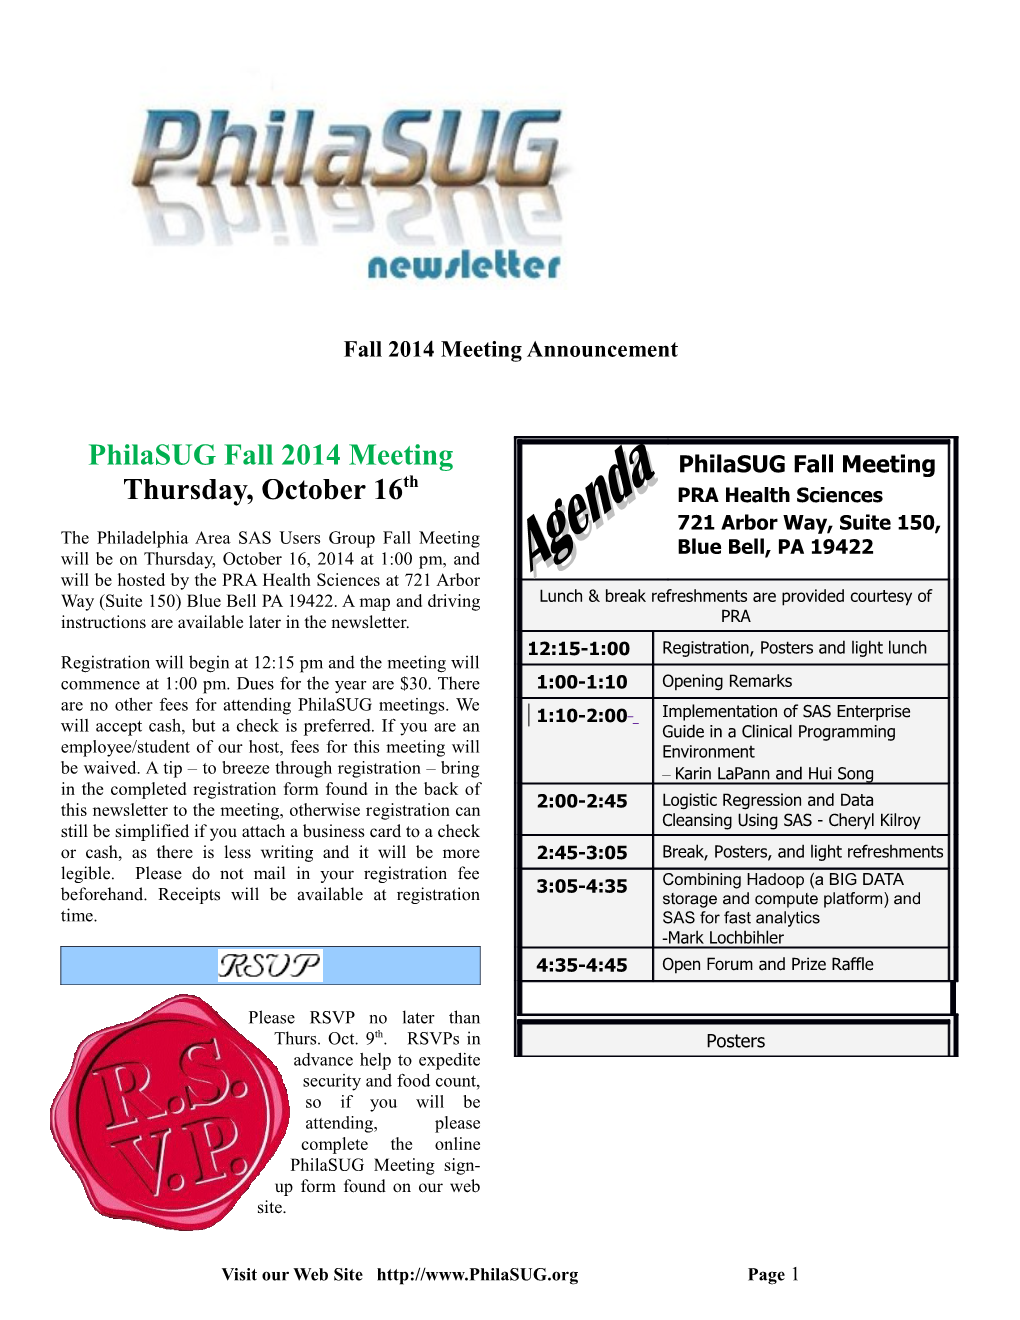 Philasug 2014 Spring Meeting Newsletter